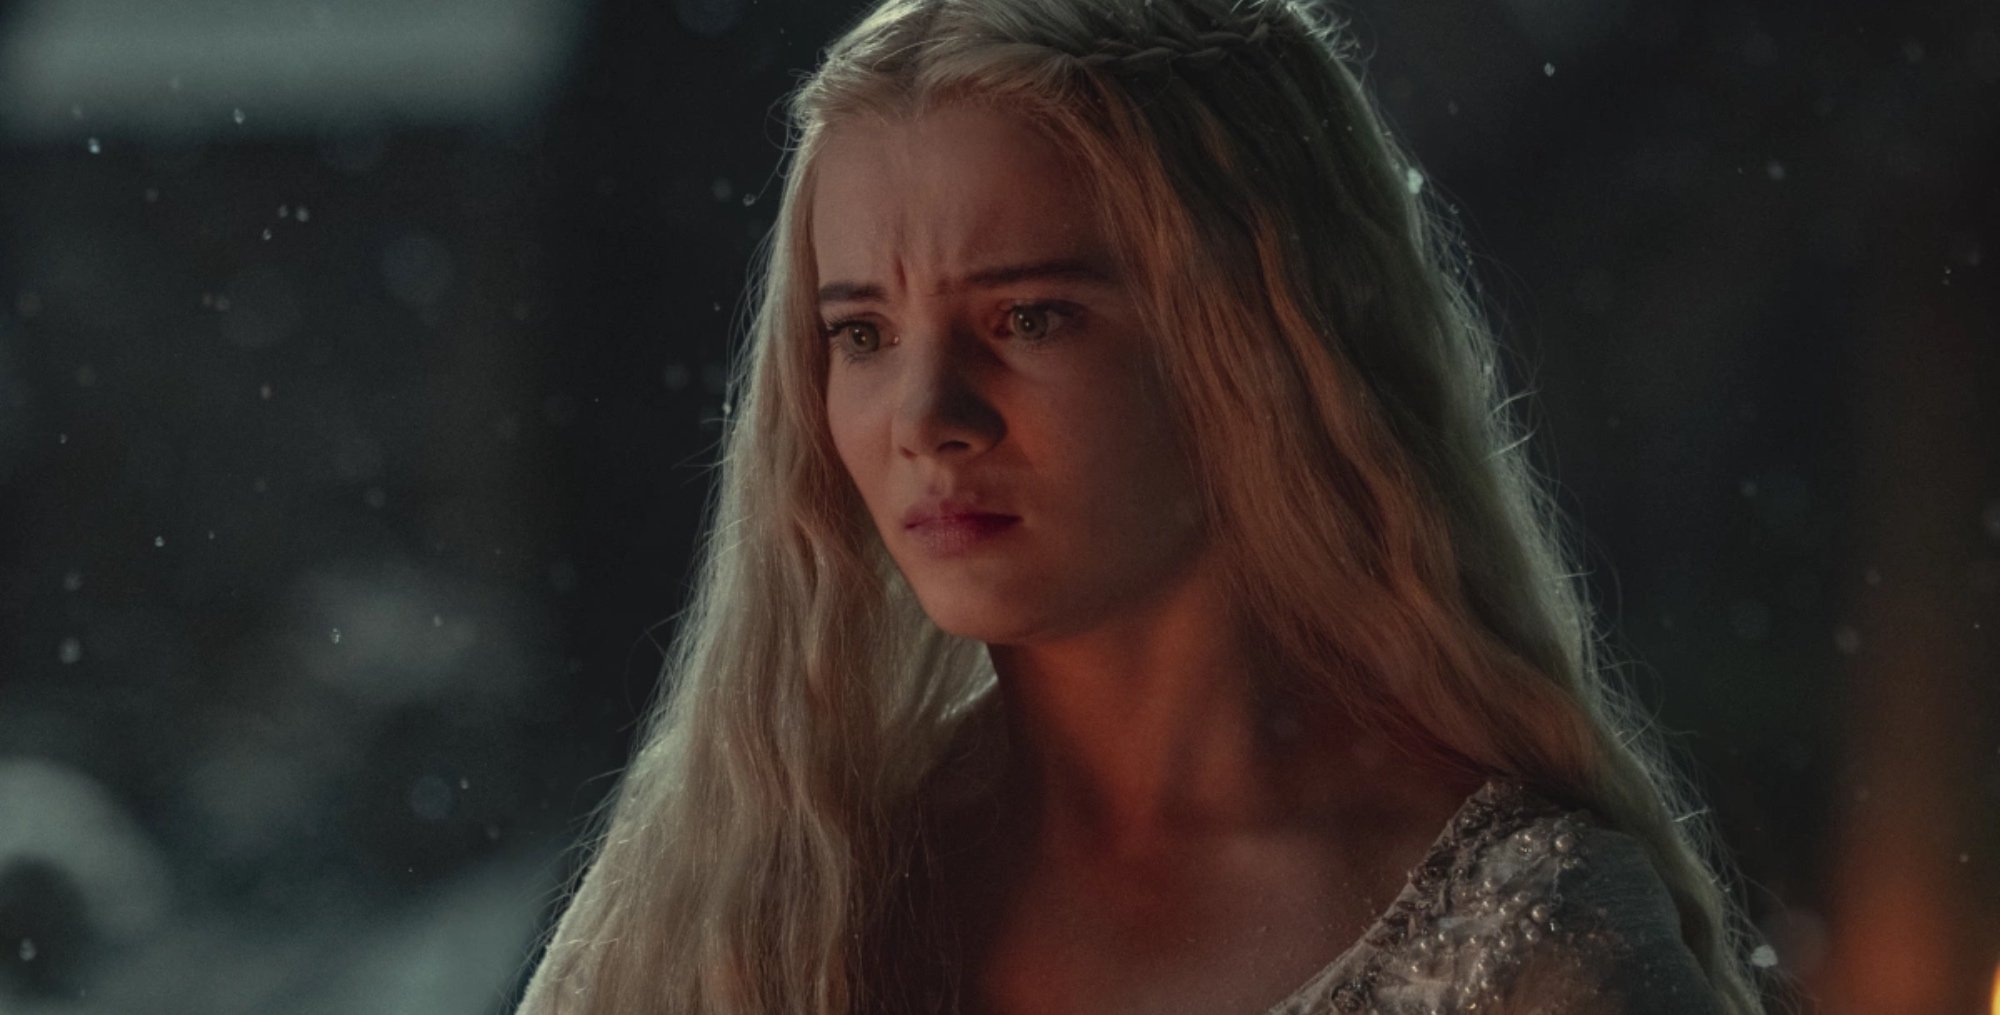 Ciri in 'The Witcher' Season 2, Episode 1 wearing white dress outside.